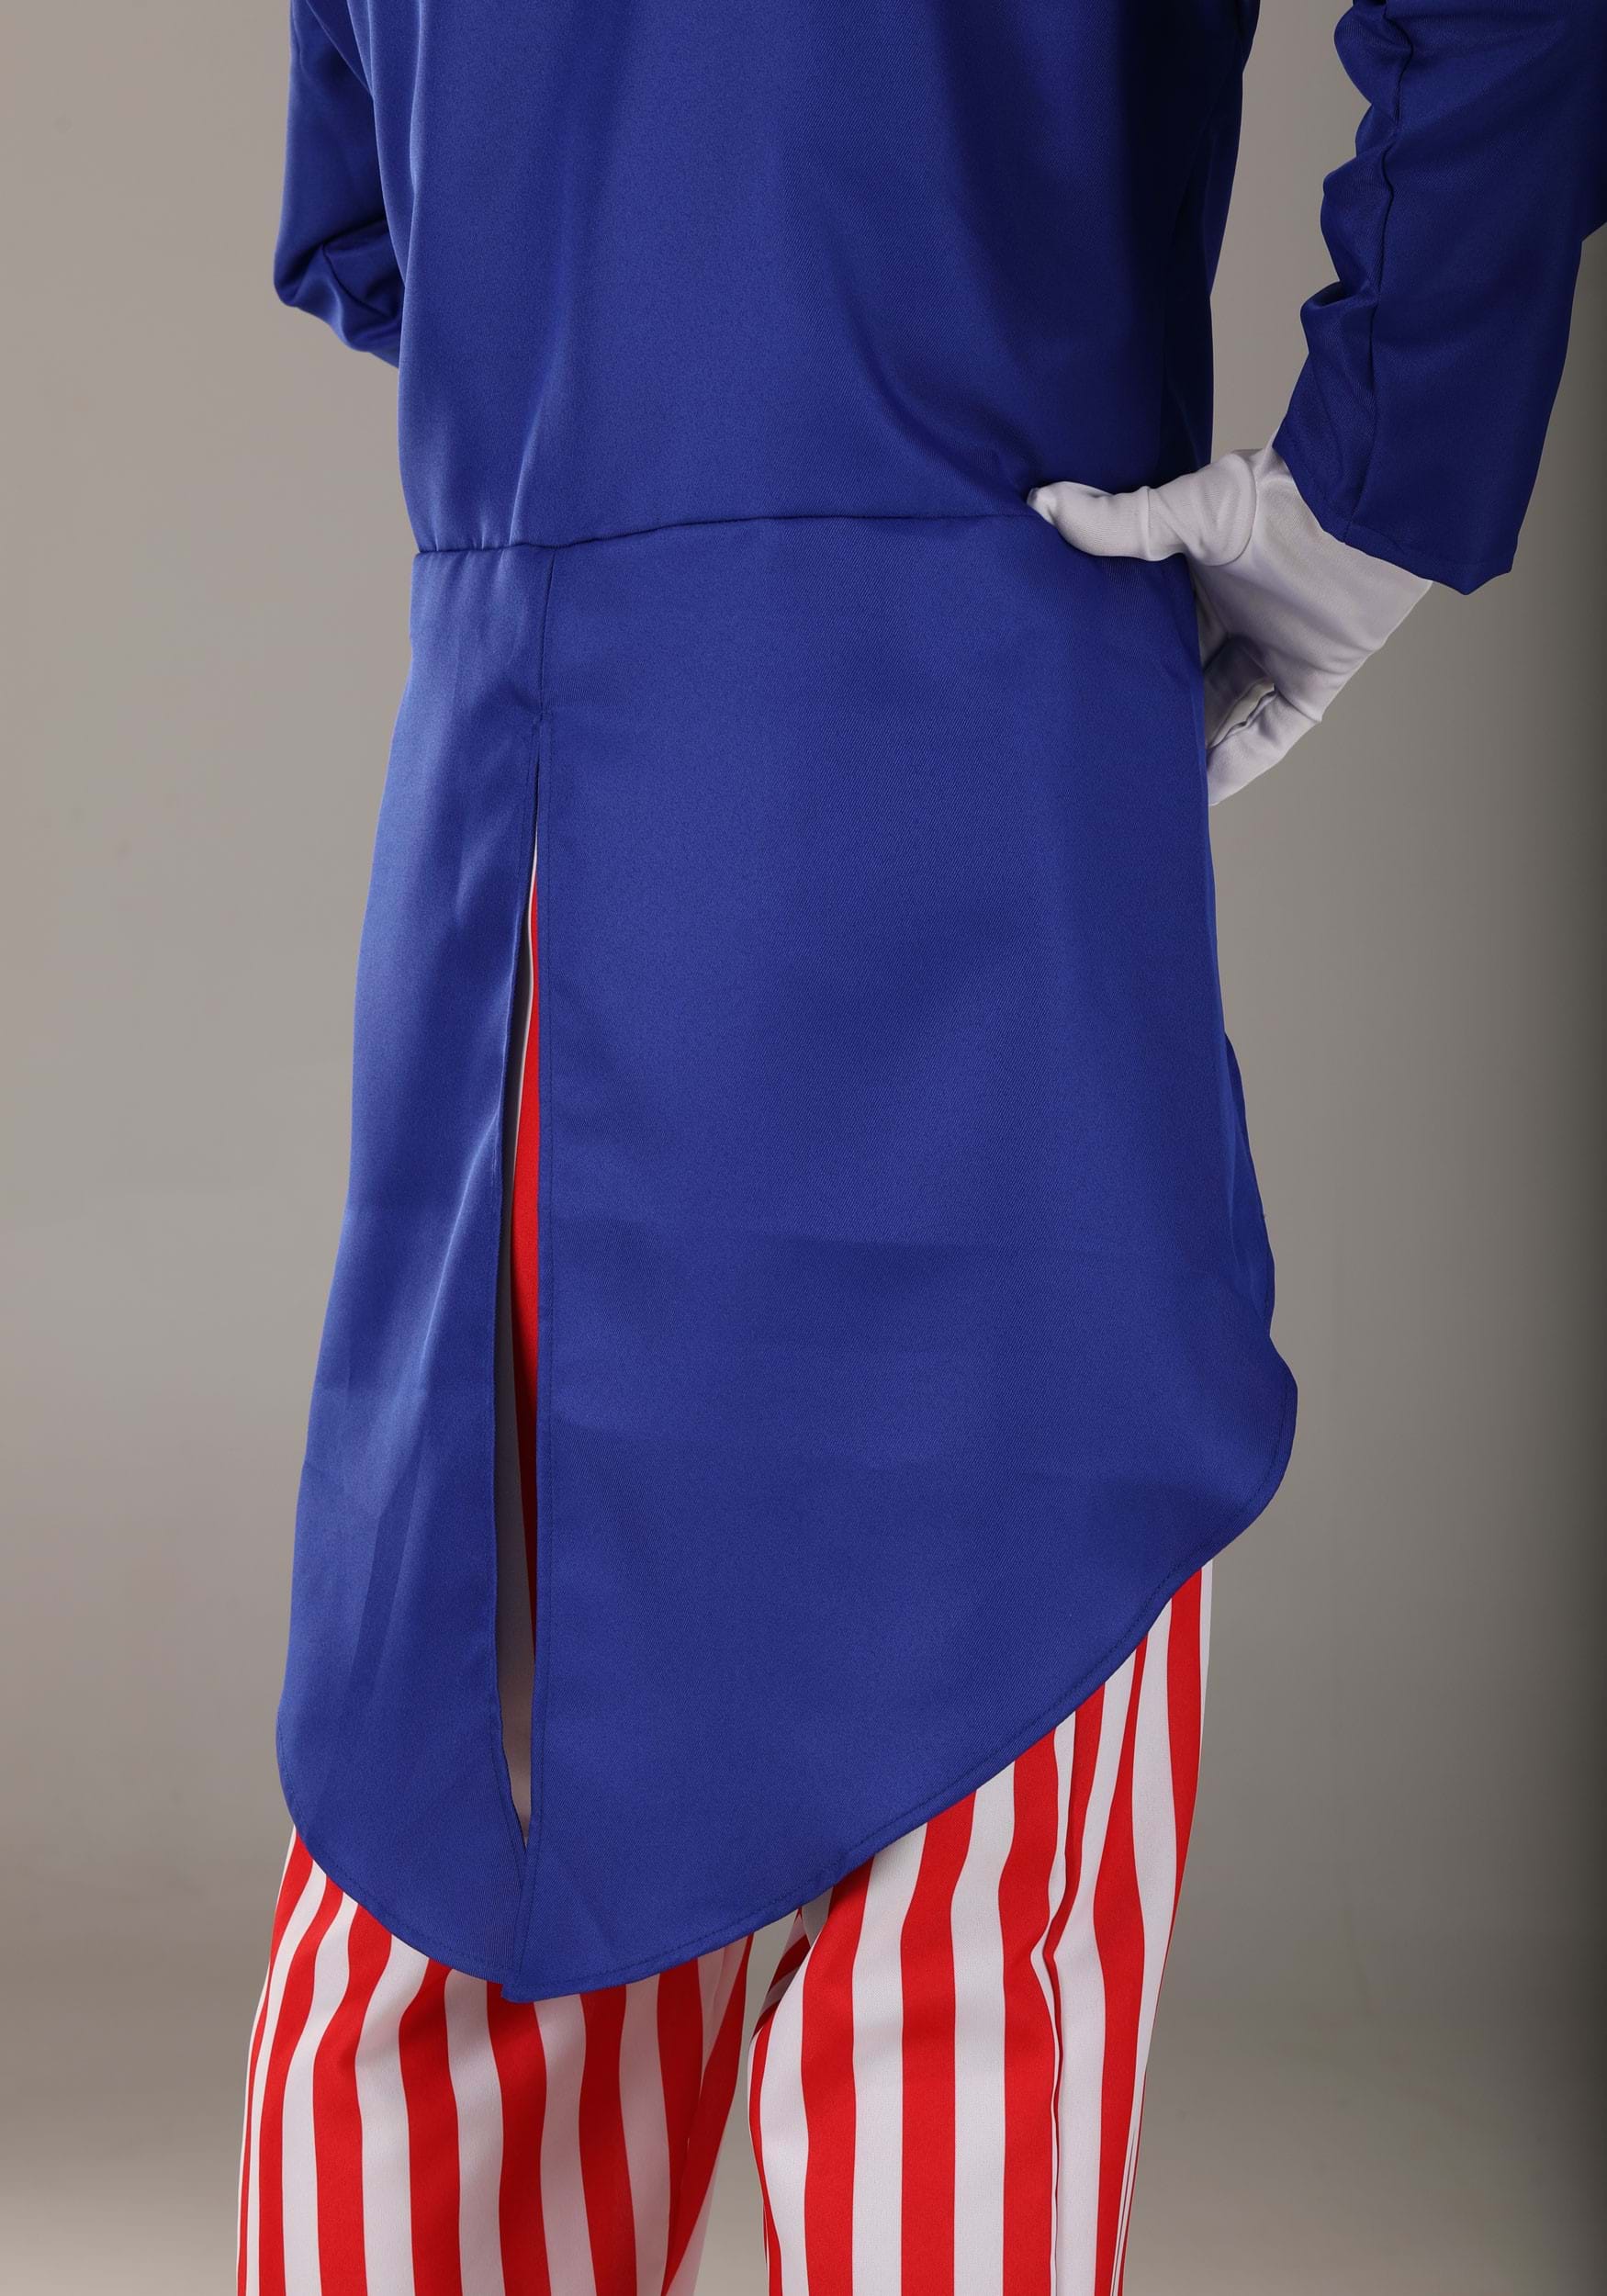 Deluxe Uncle Sam Fancy Dress Costume For Men